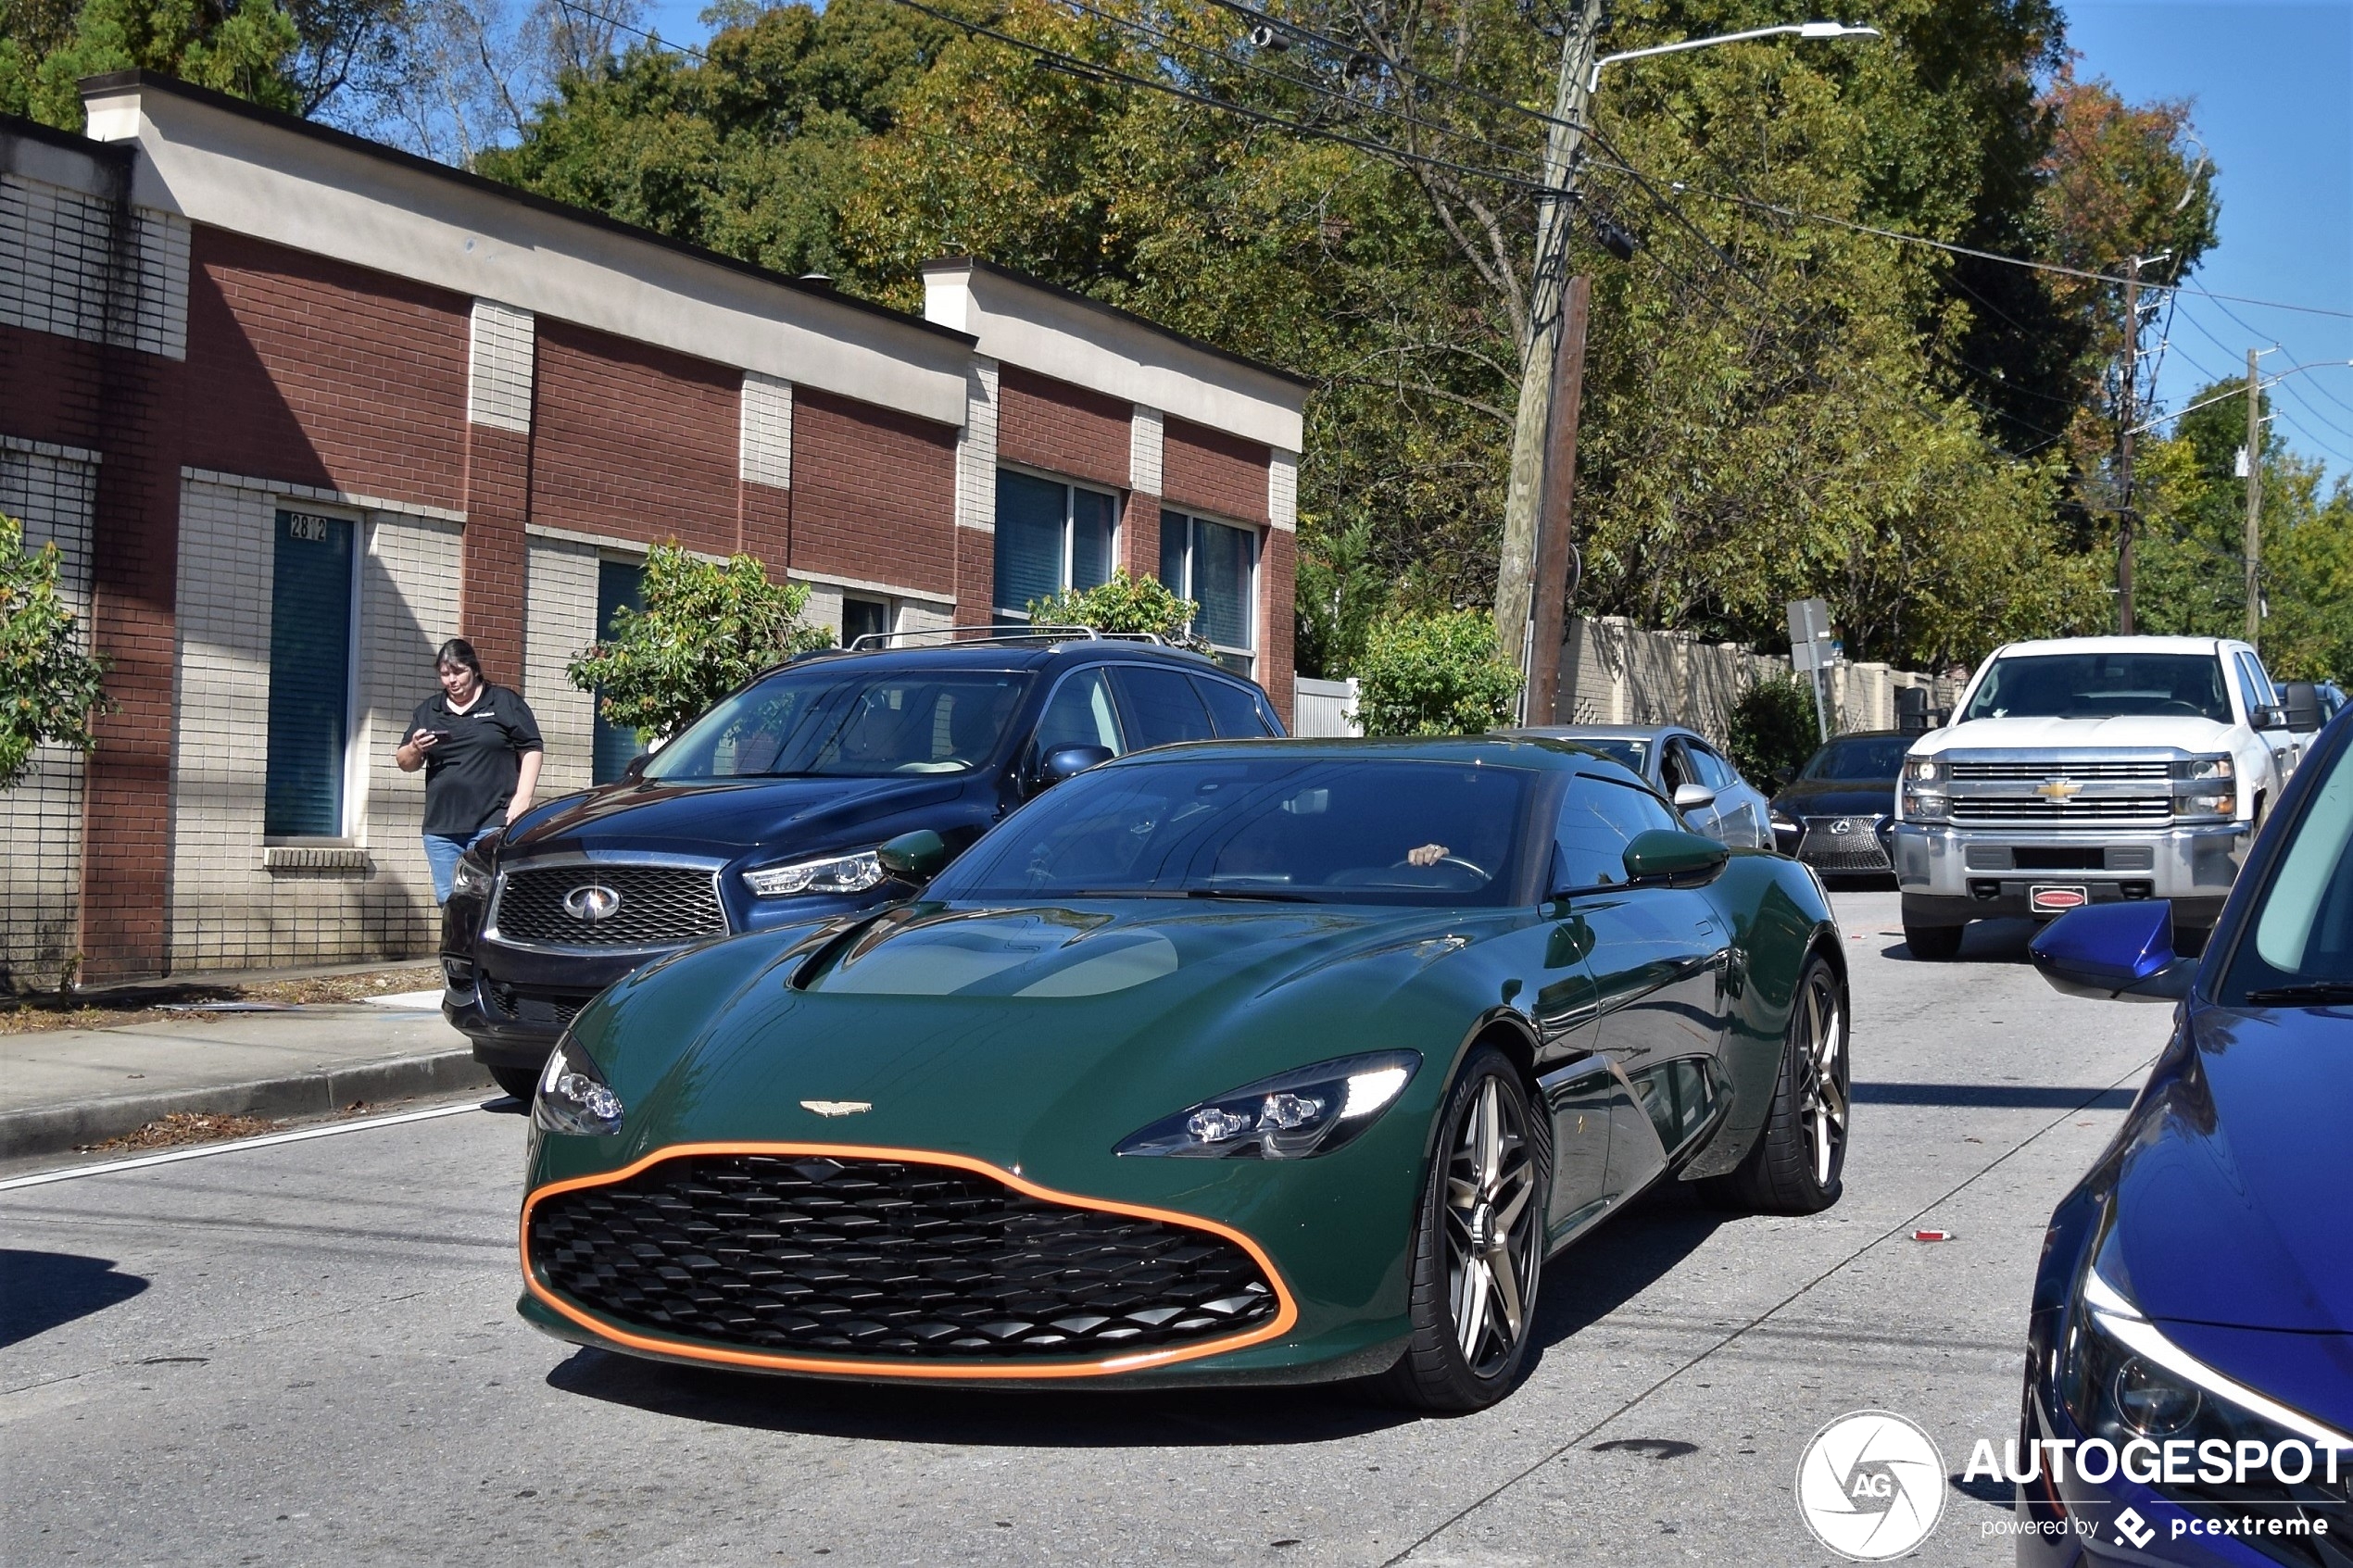 Aston Martin DBS GT Zagato shows off in Atlanta